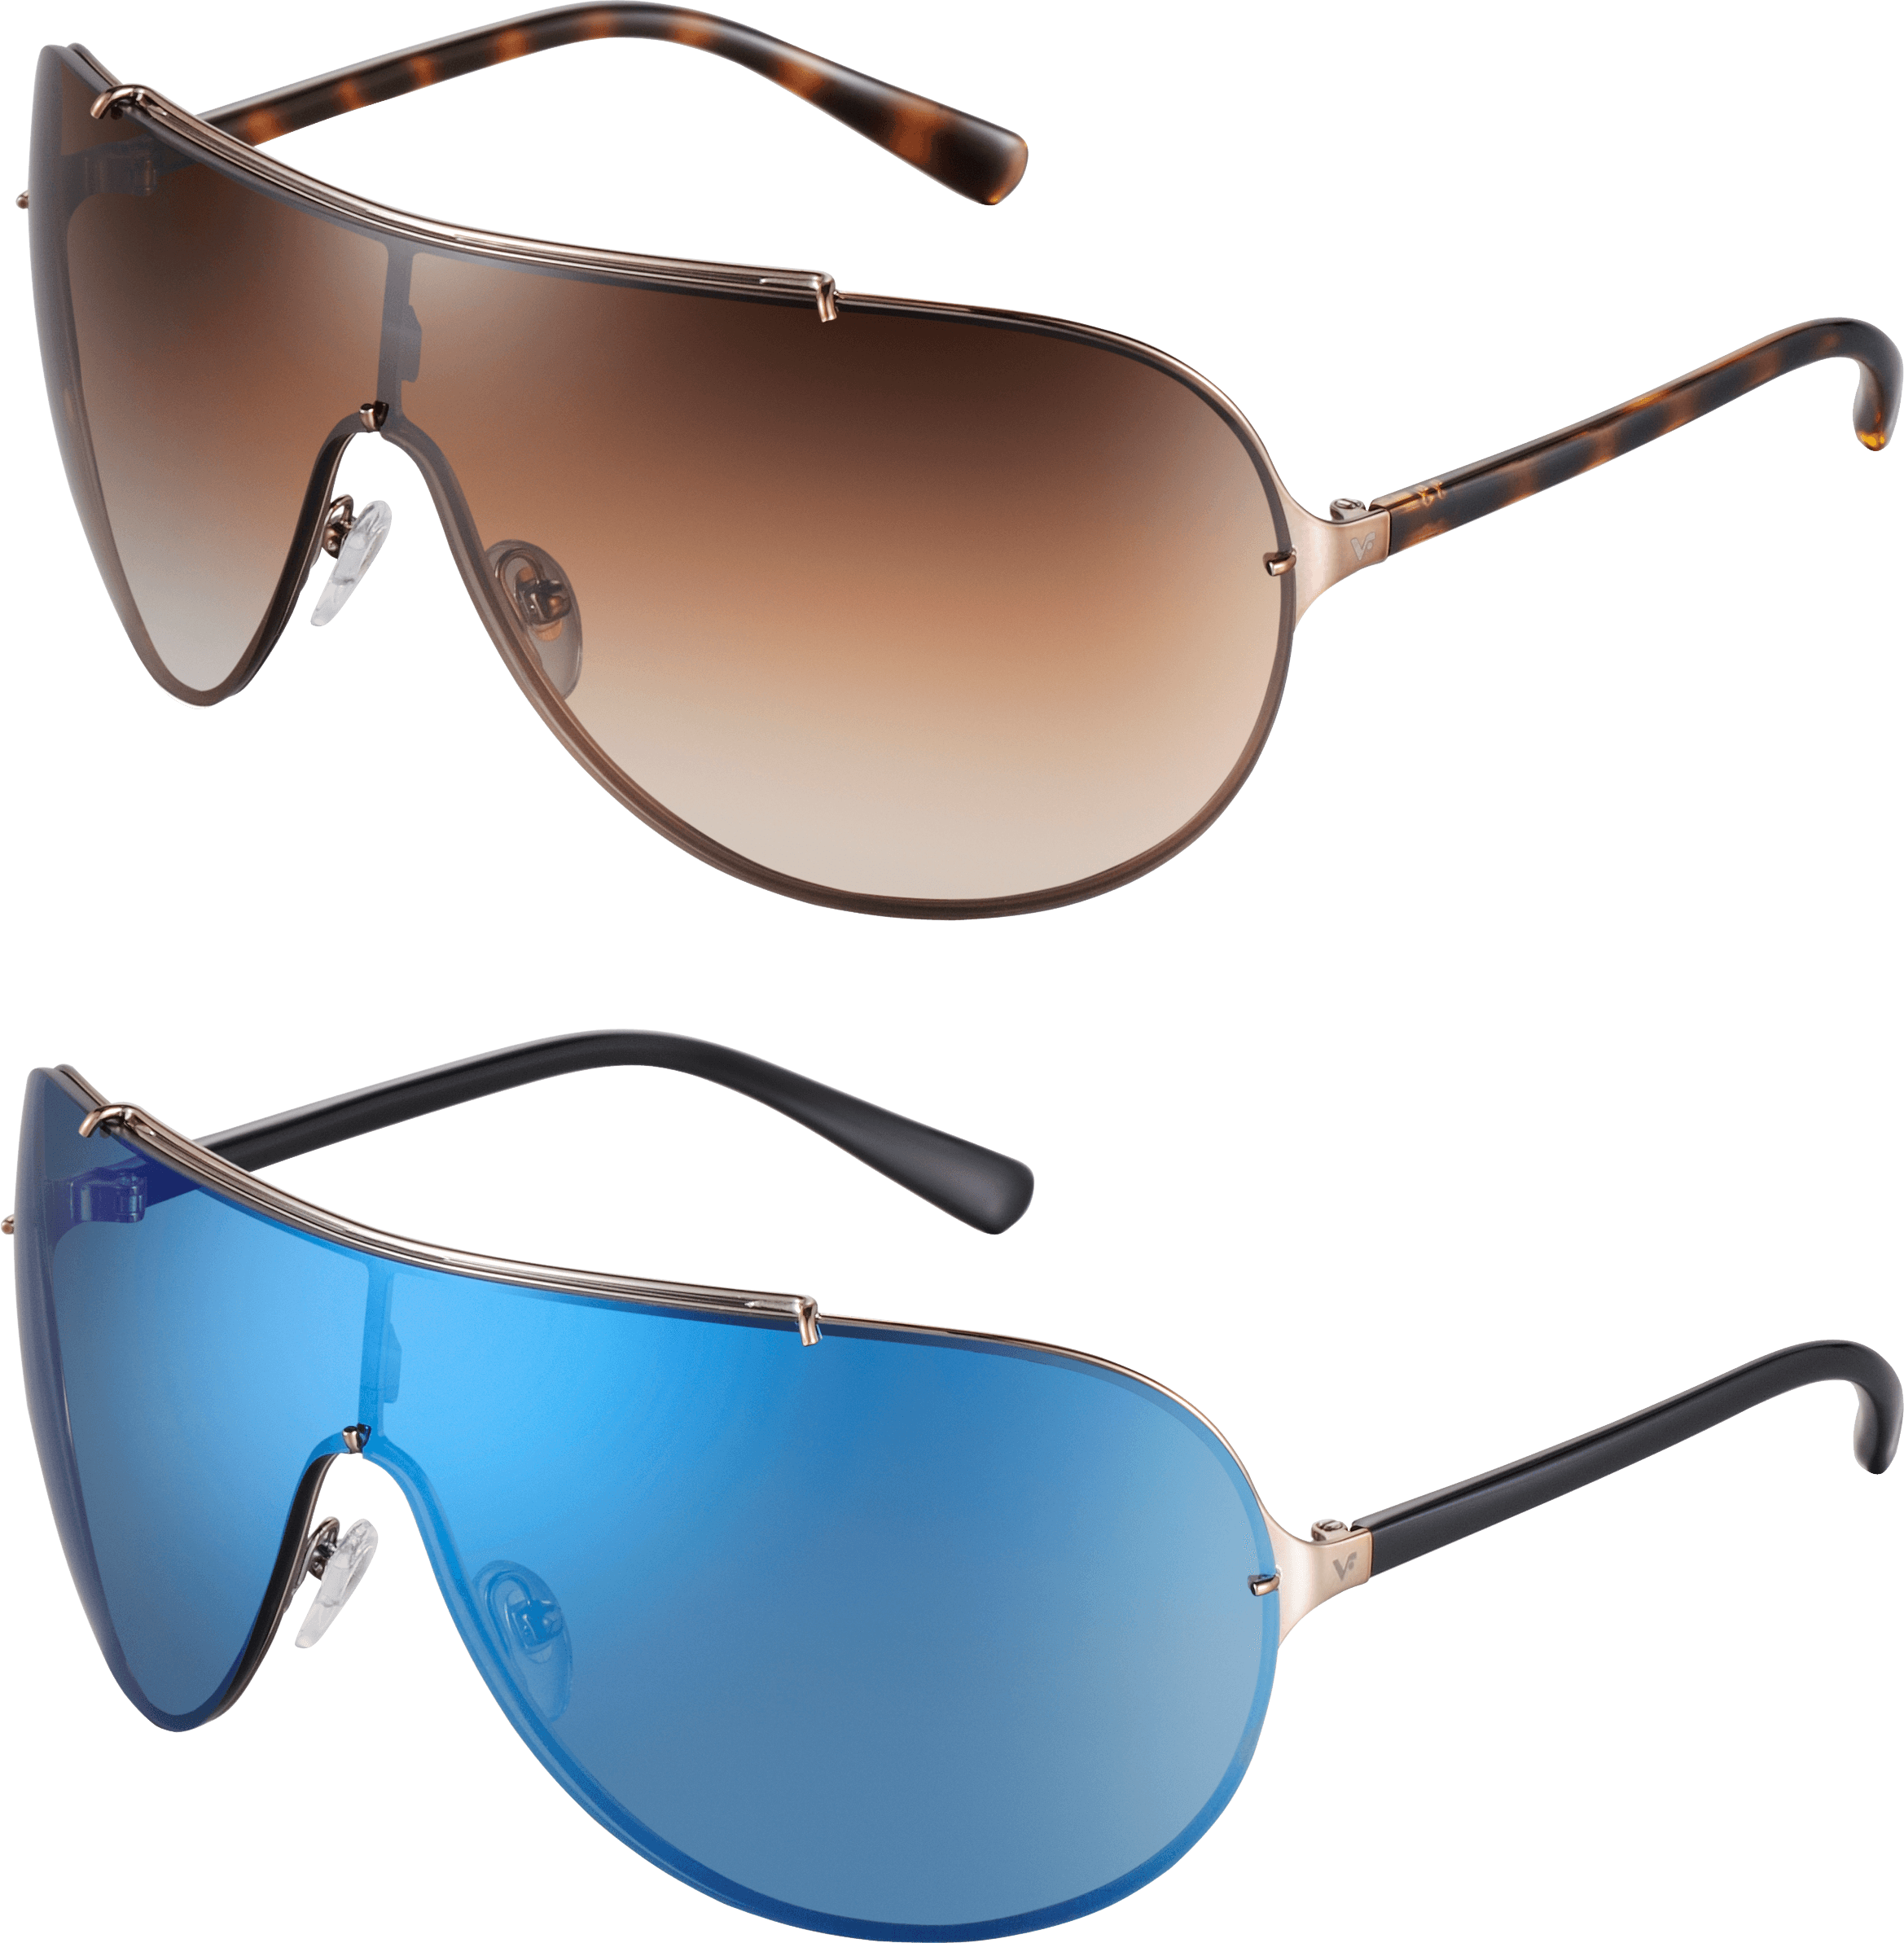 Sunglasses Editing Studio Picsart Glasses HD Image Free PNG Clipart